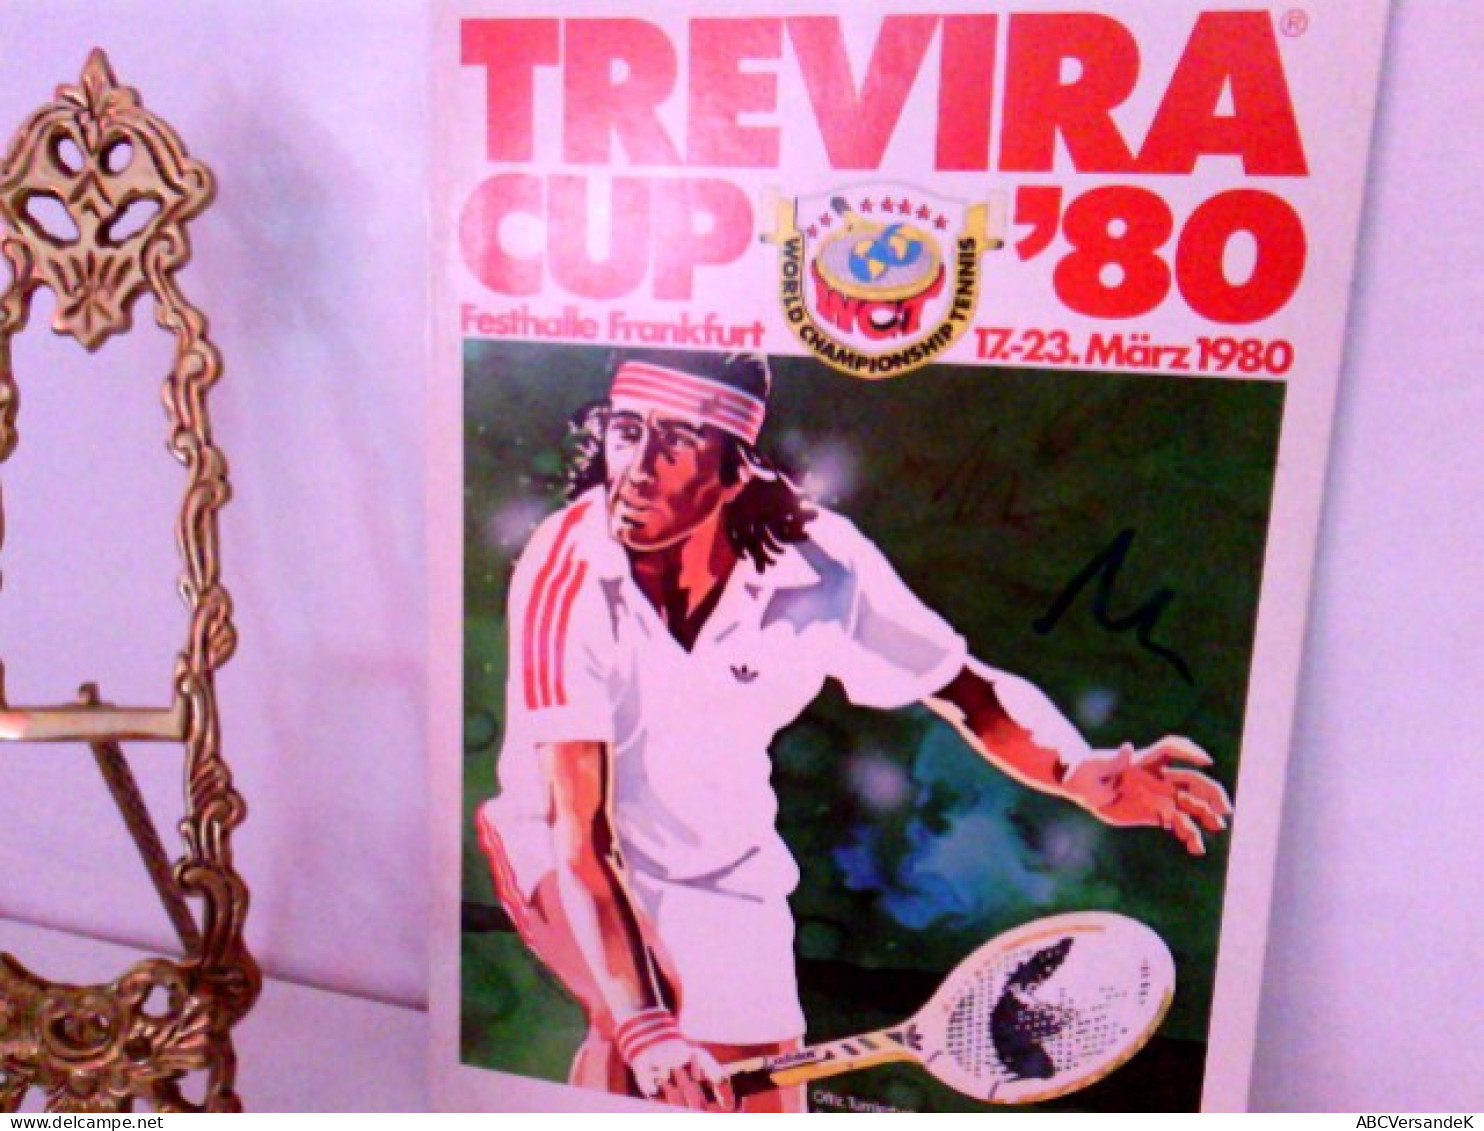 World Championship Tennis - TREVIRA CUP '80 Festhalle Frankfurt 17.- 23. März 1980 - Deportes